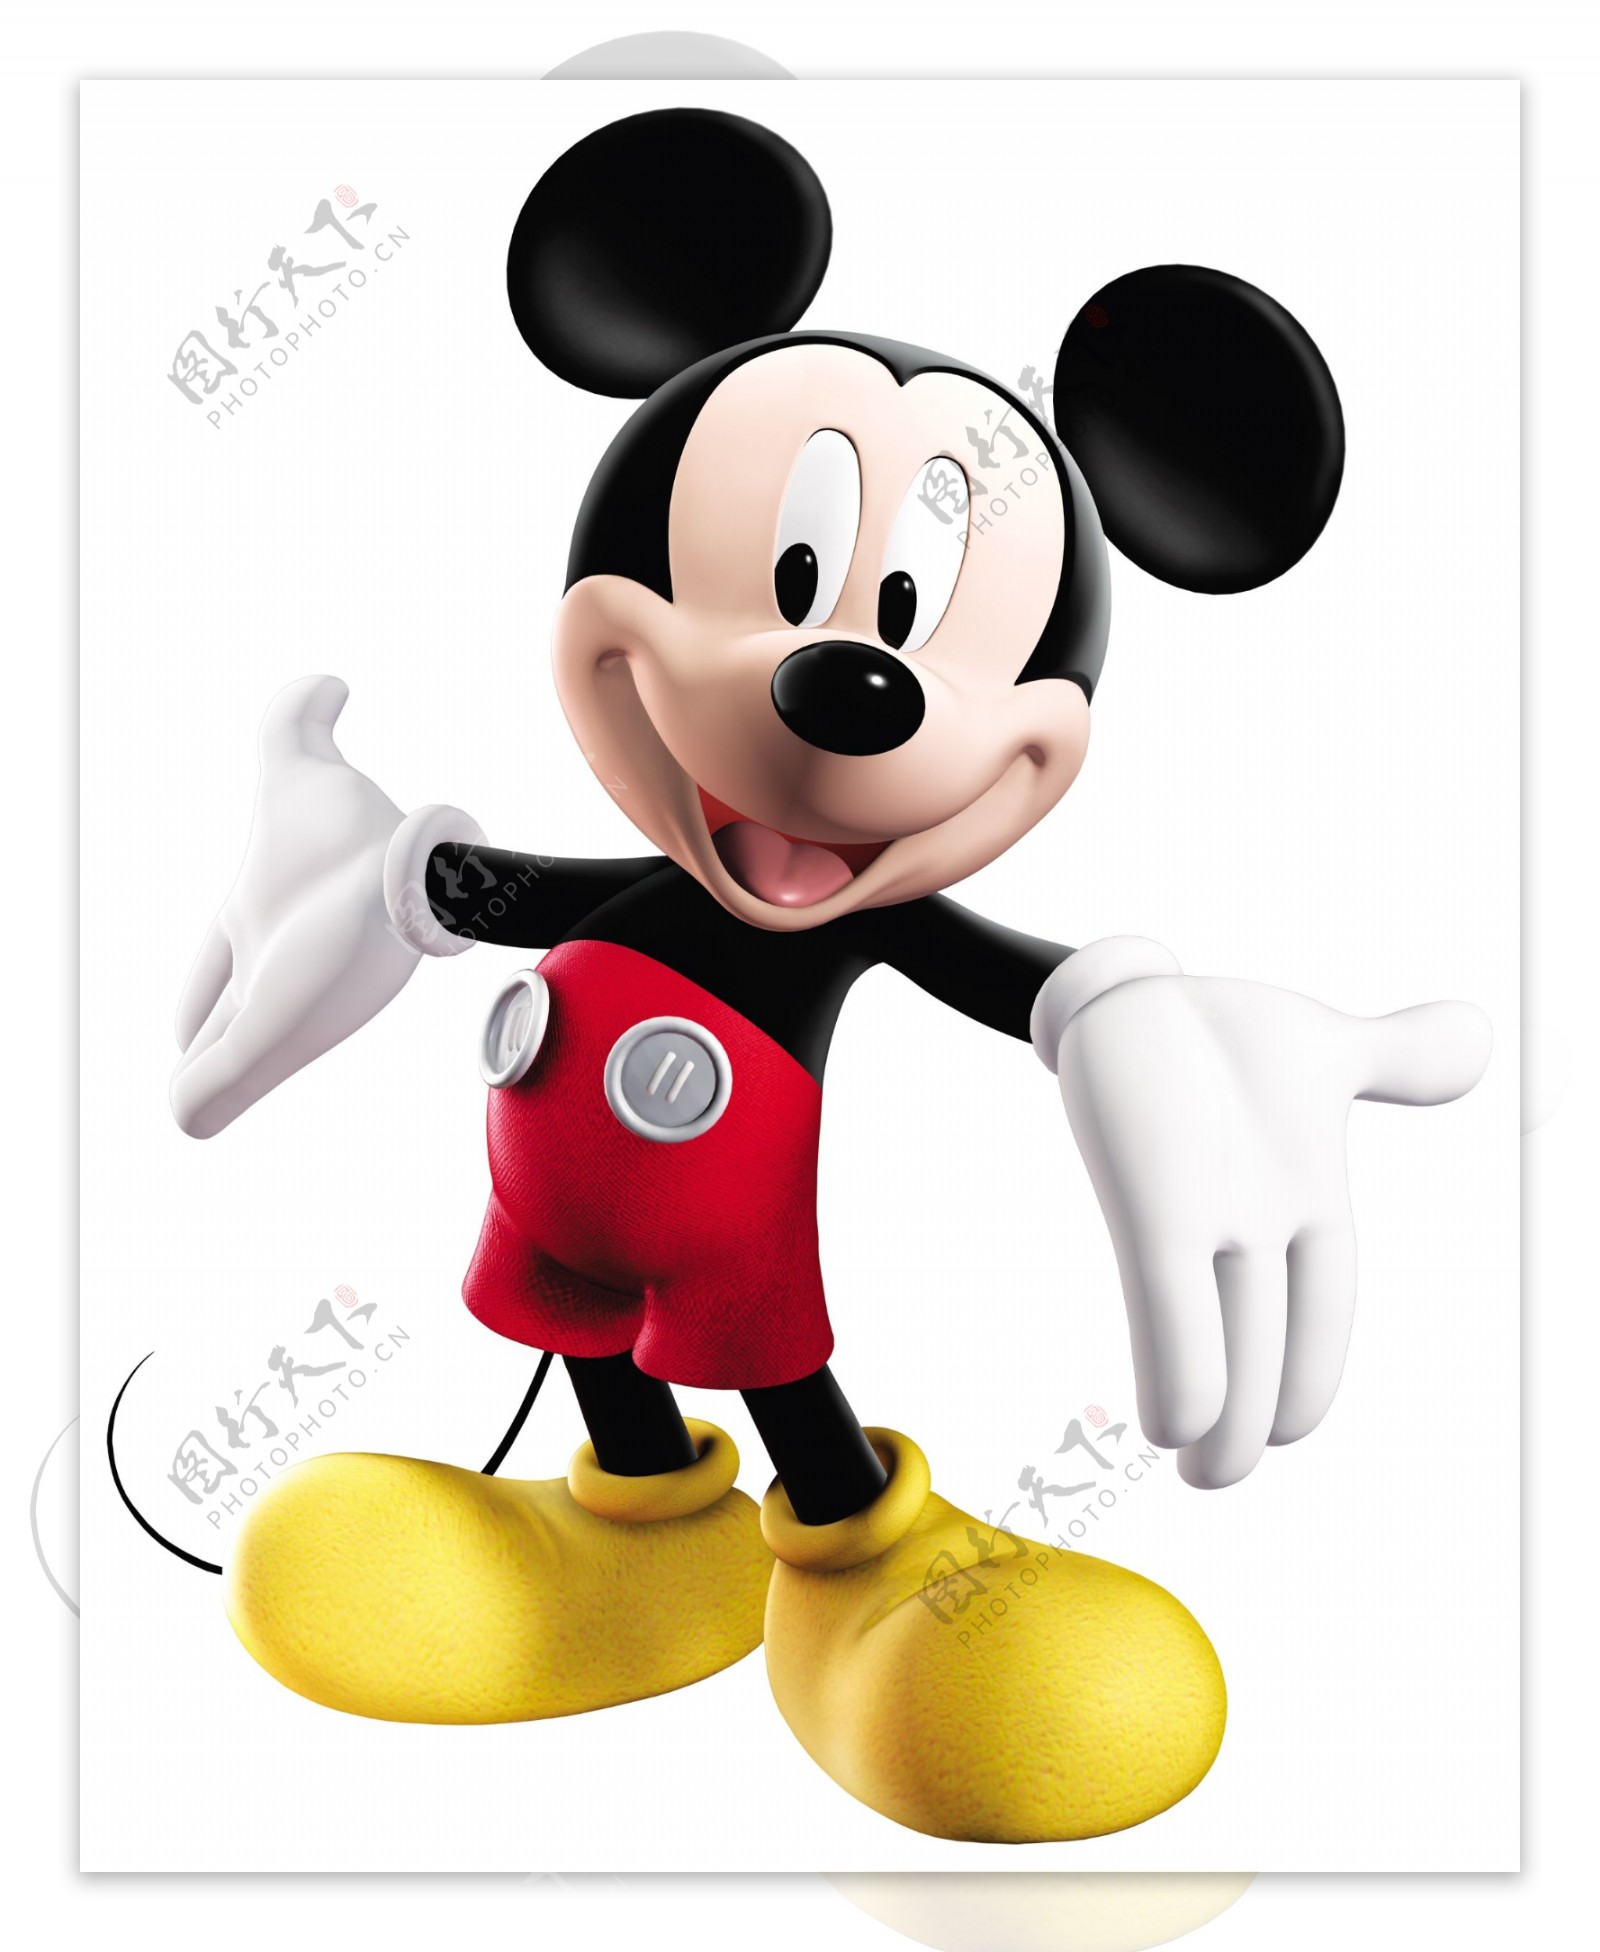 Disney米老鼠图片专题,Disney米老鼠下载_昵图网nipic.com